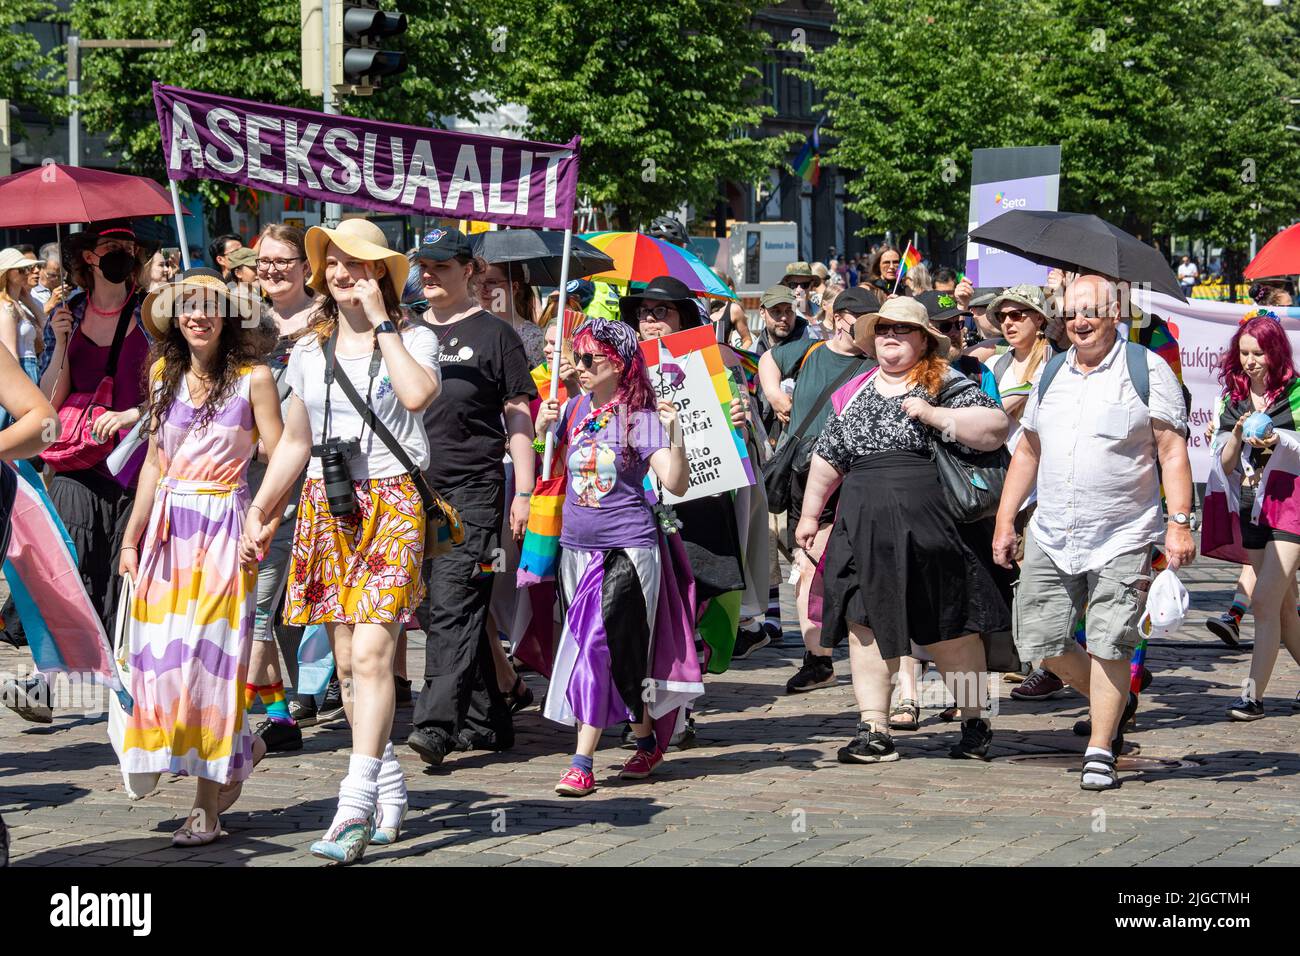 Aseksuaalit banner at Helsinki Pride 2022 Parade in Helsinki, Finland Stock Photo